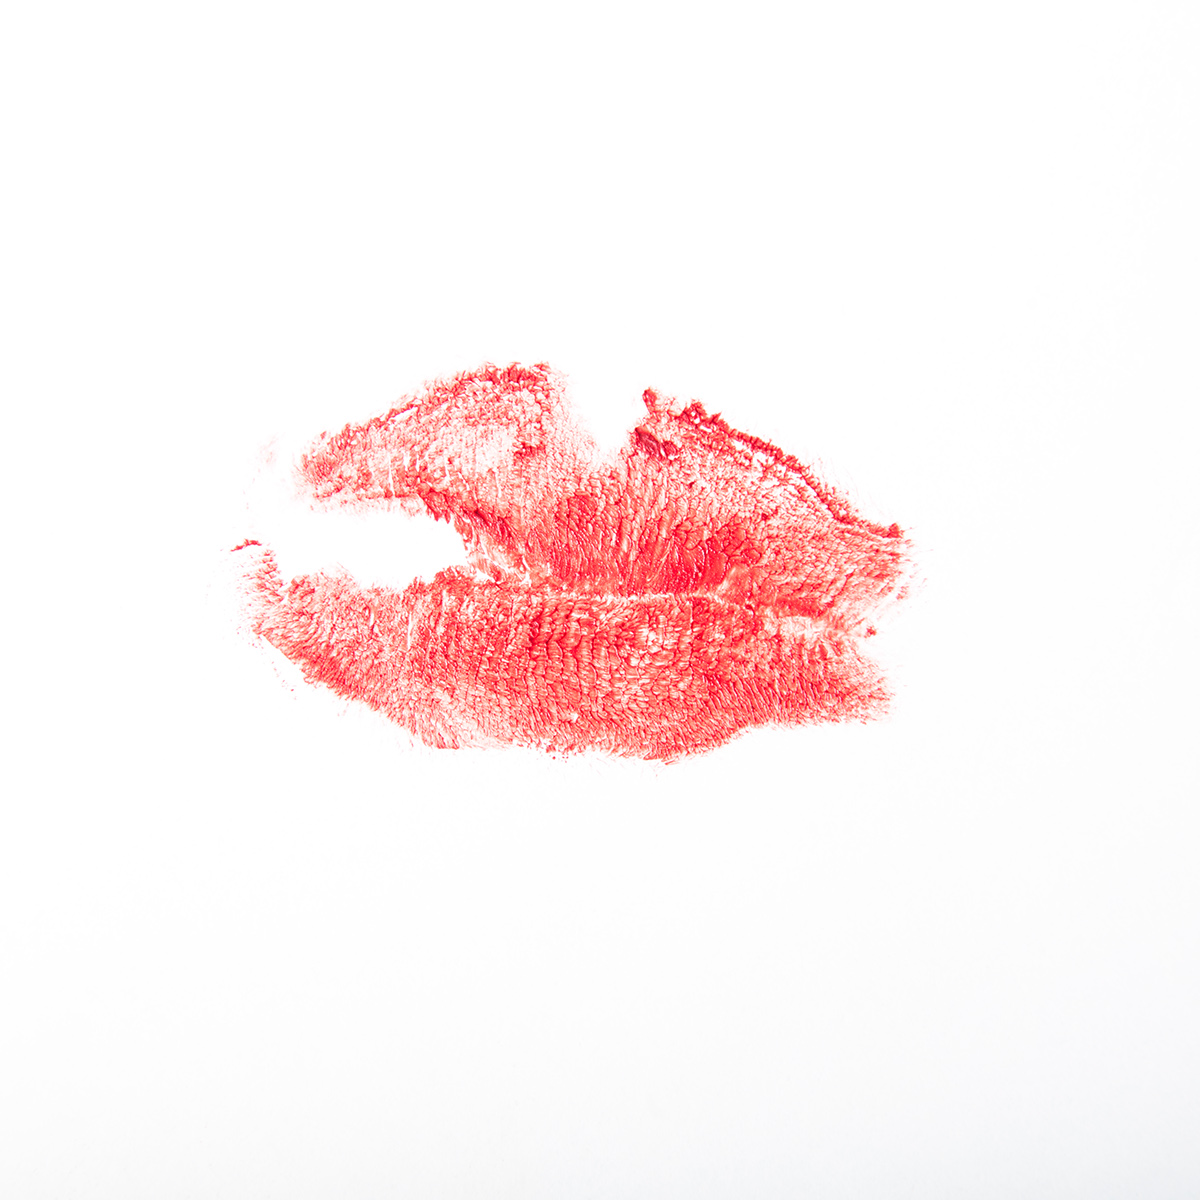 color lipstick kiss ring wine tempera Food  Tomato ketchup pen pencil sharpener crayon blot school